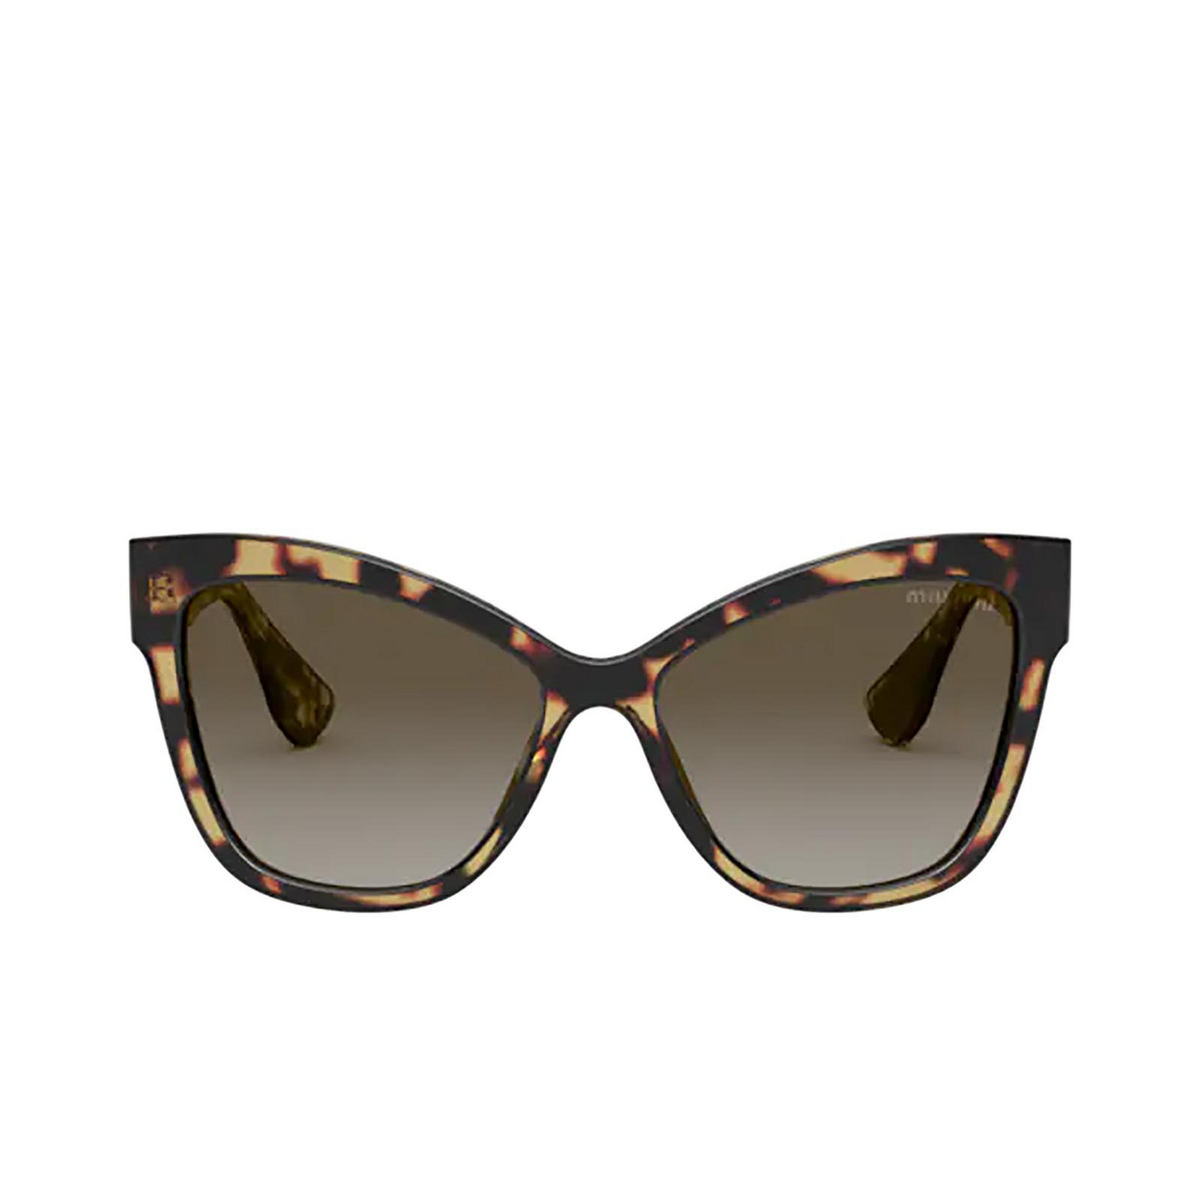 Miu Miu® Cat-eye Sunglasses: MU 08VS color Havana 09H0A7 - front view.